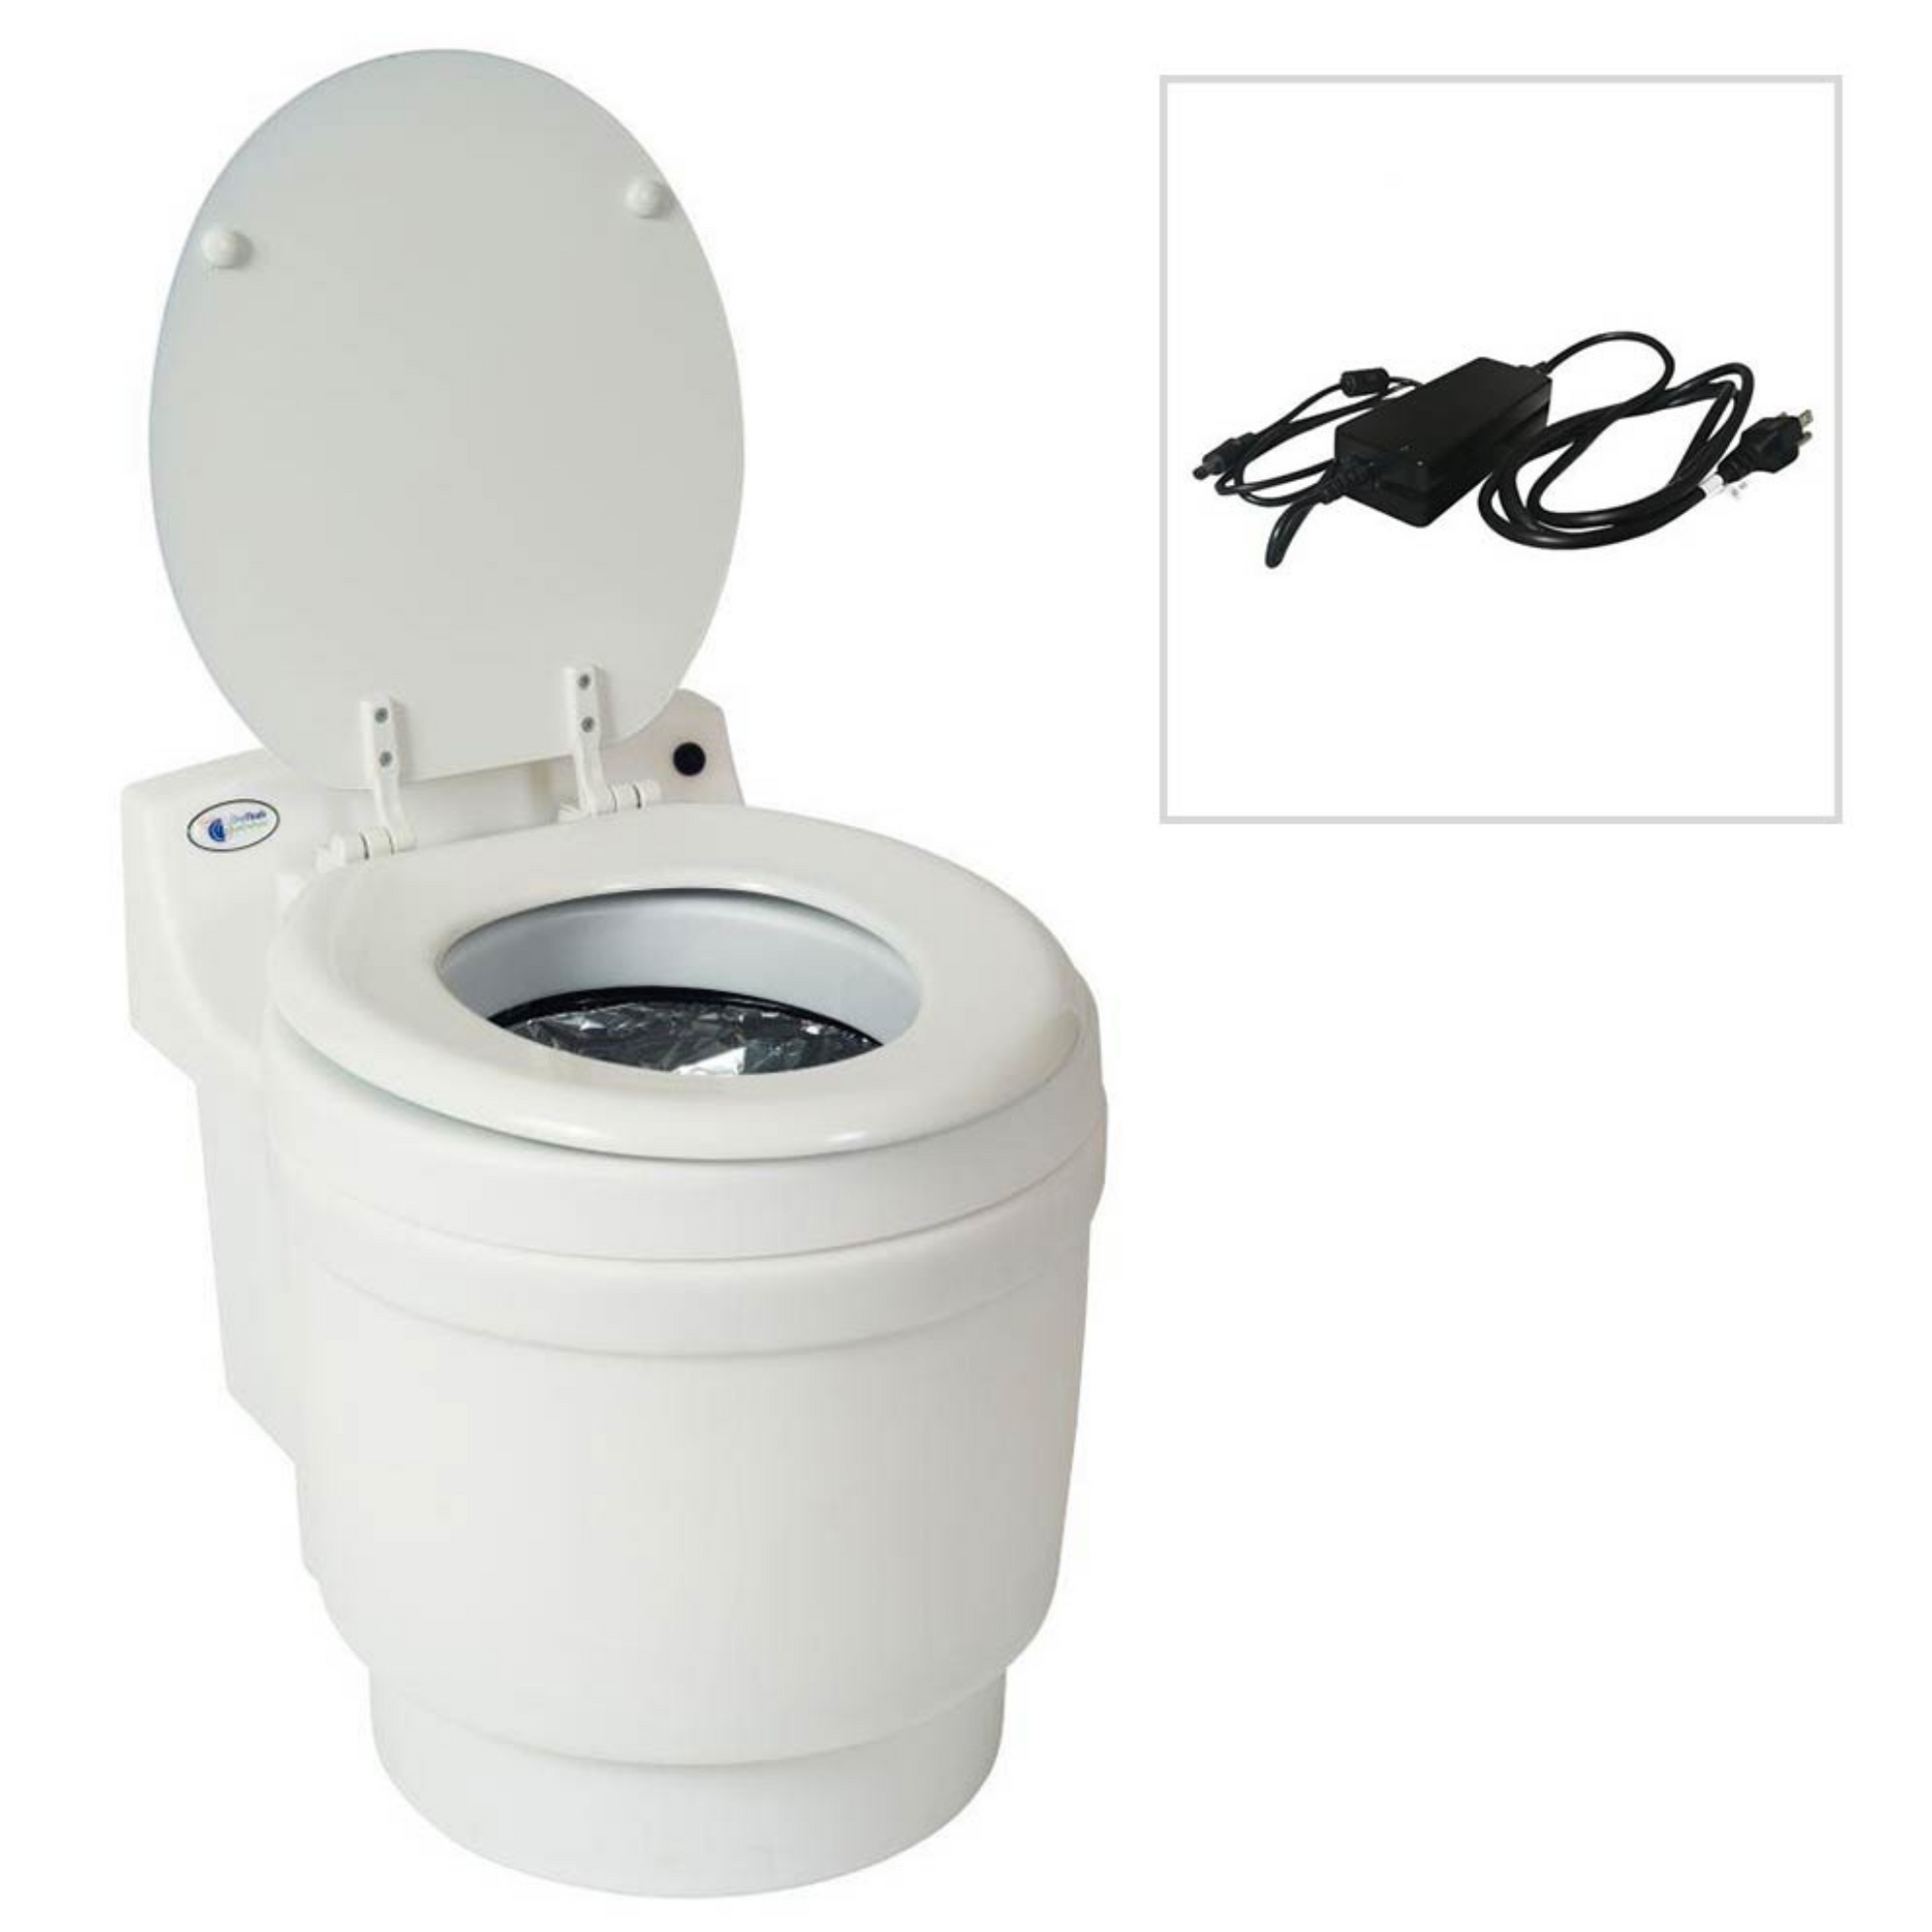 Laveo Portable Dry Flush Toilet